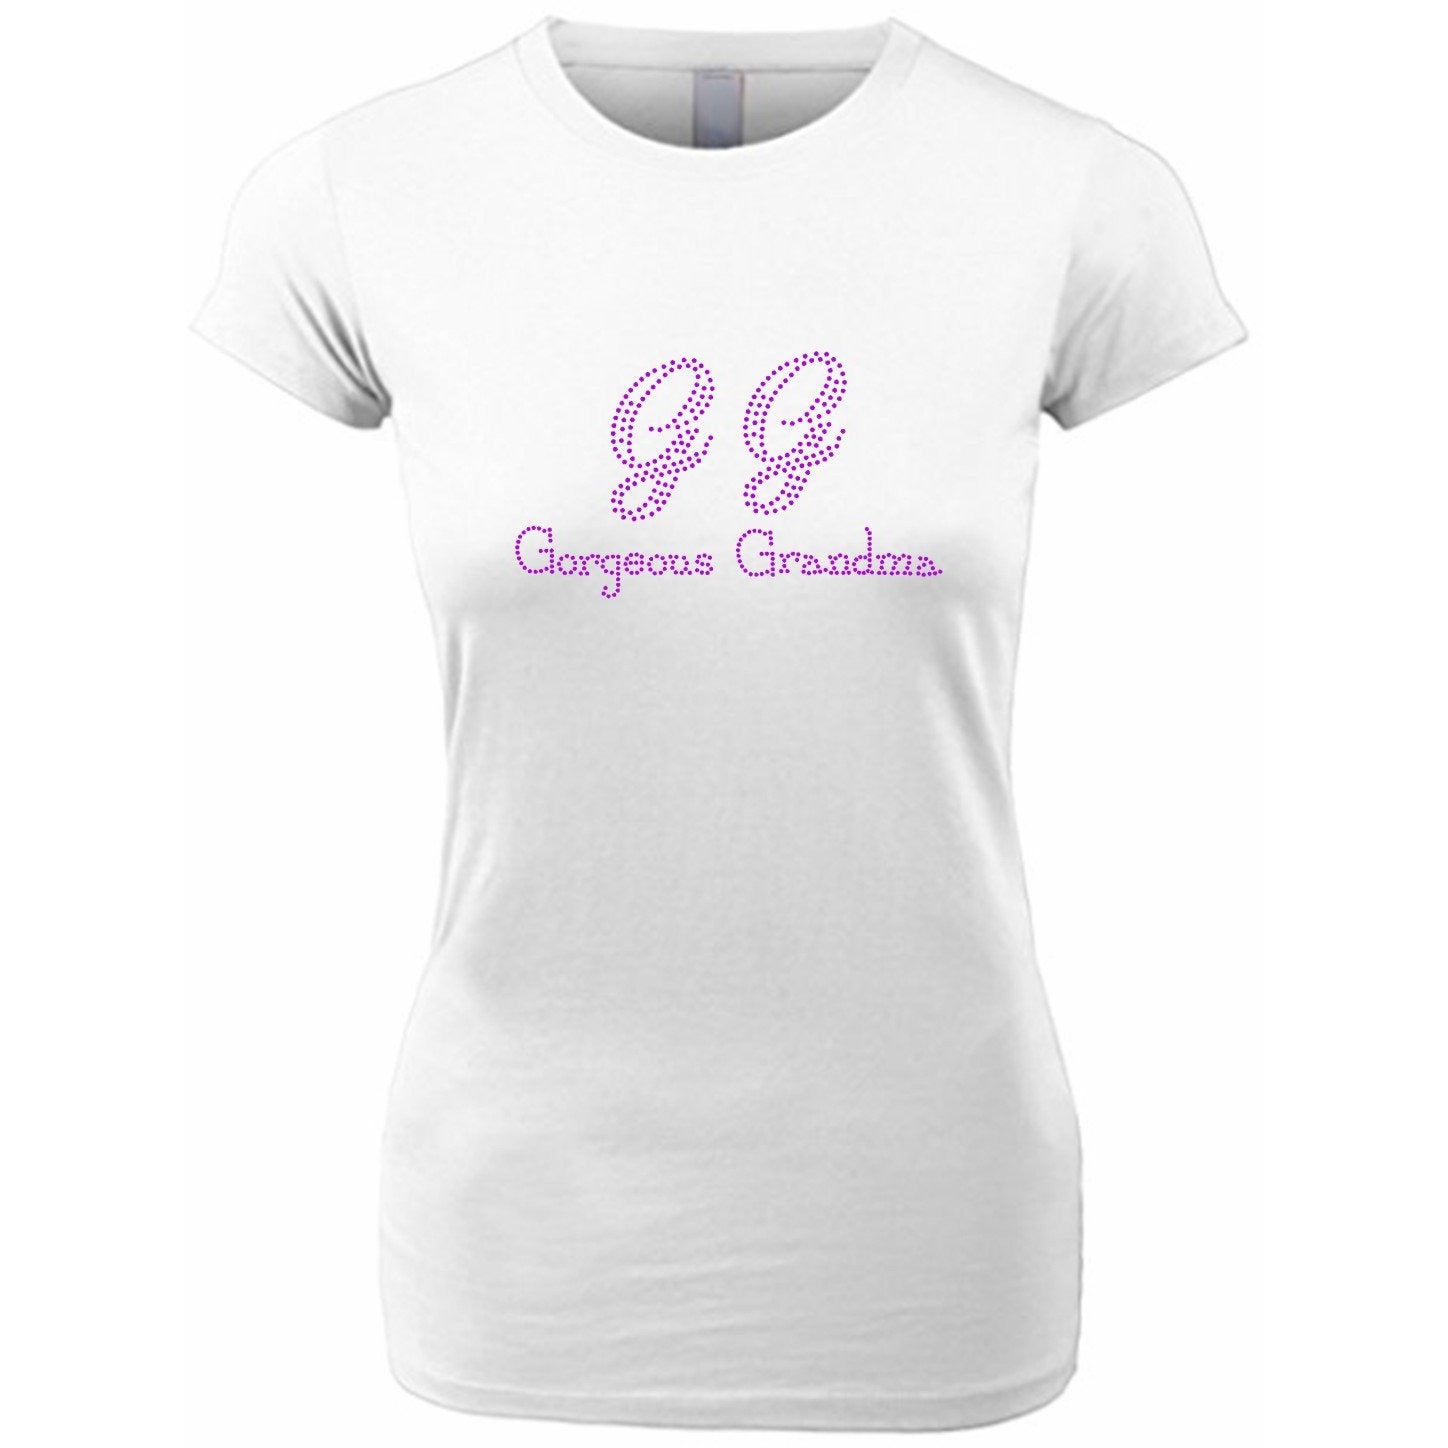 GG Gorgeous Grandma Rhinestone T Shirt